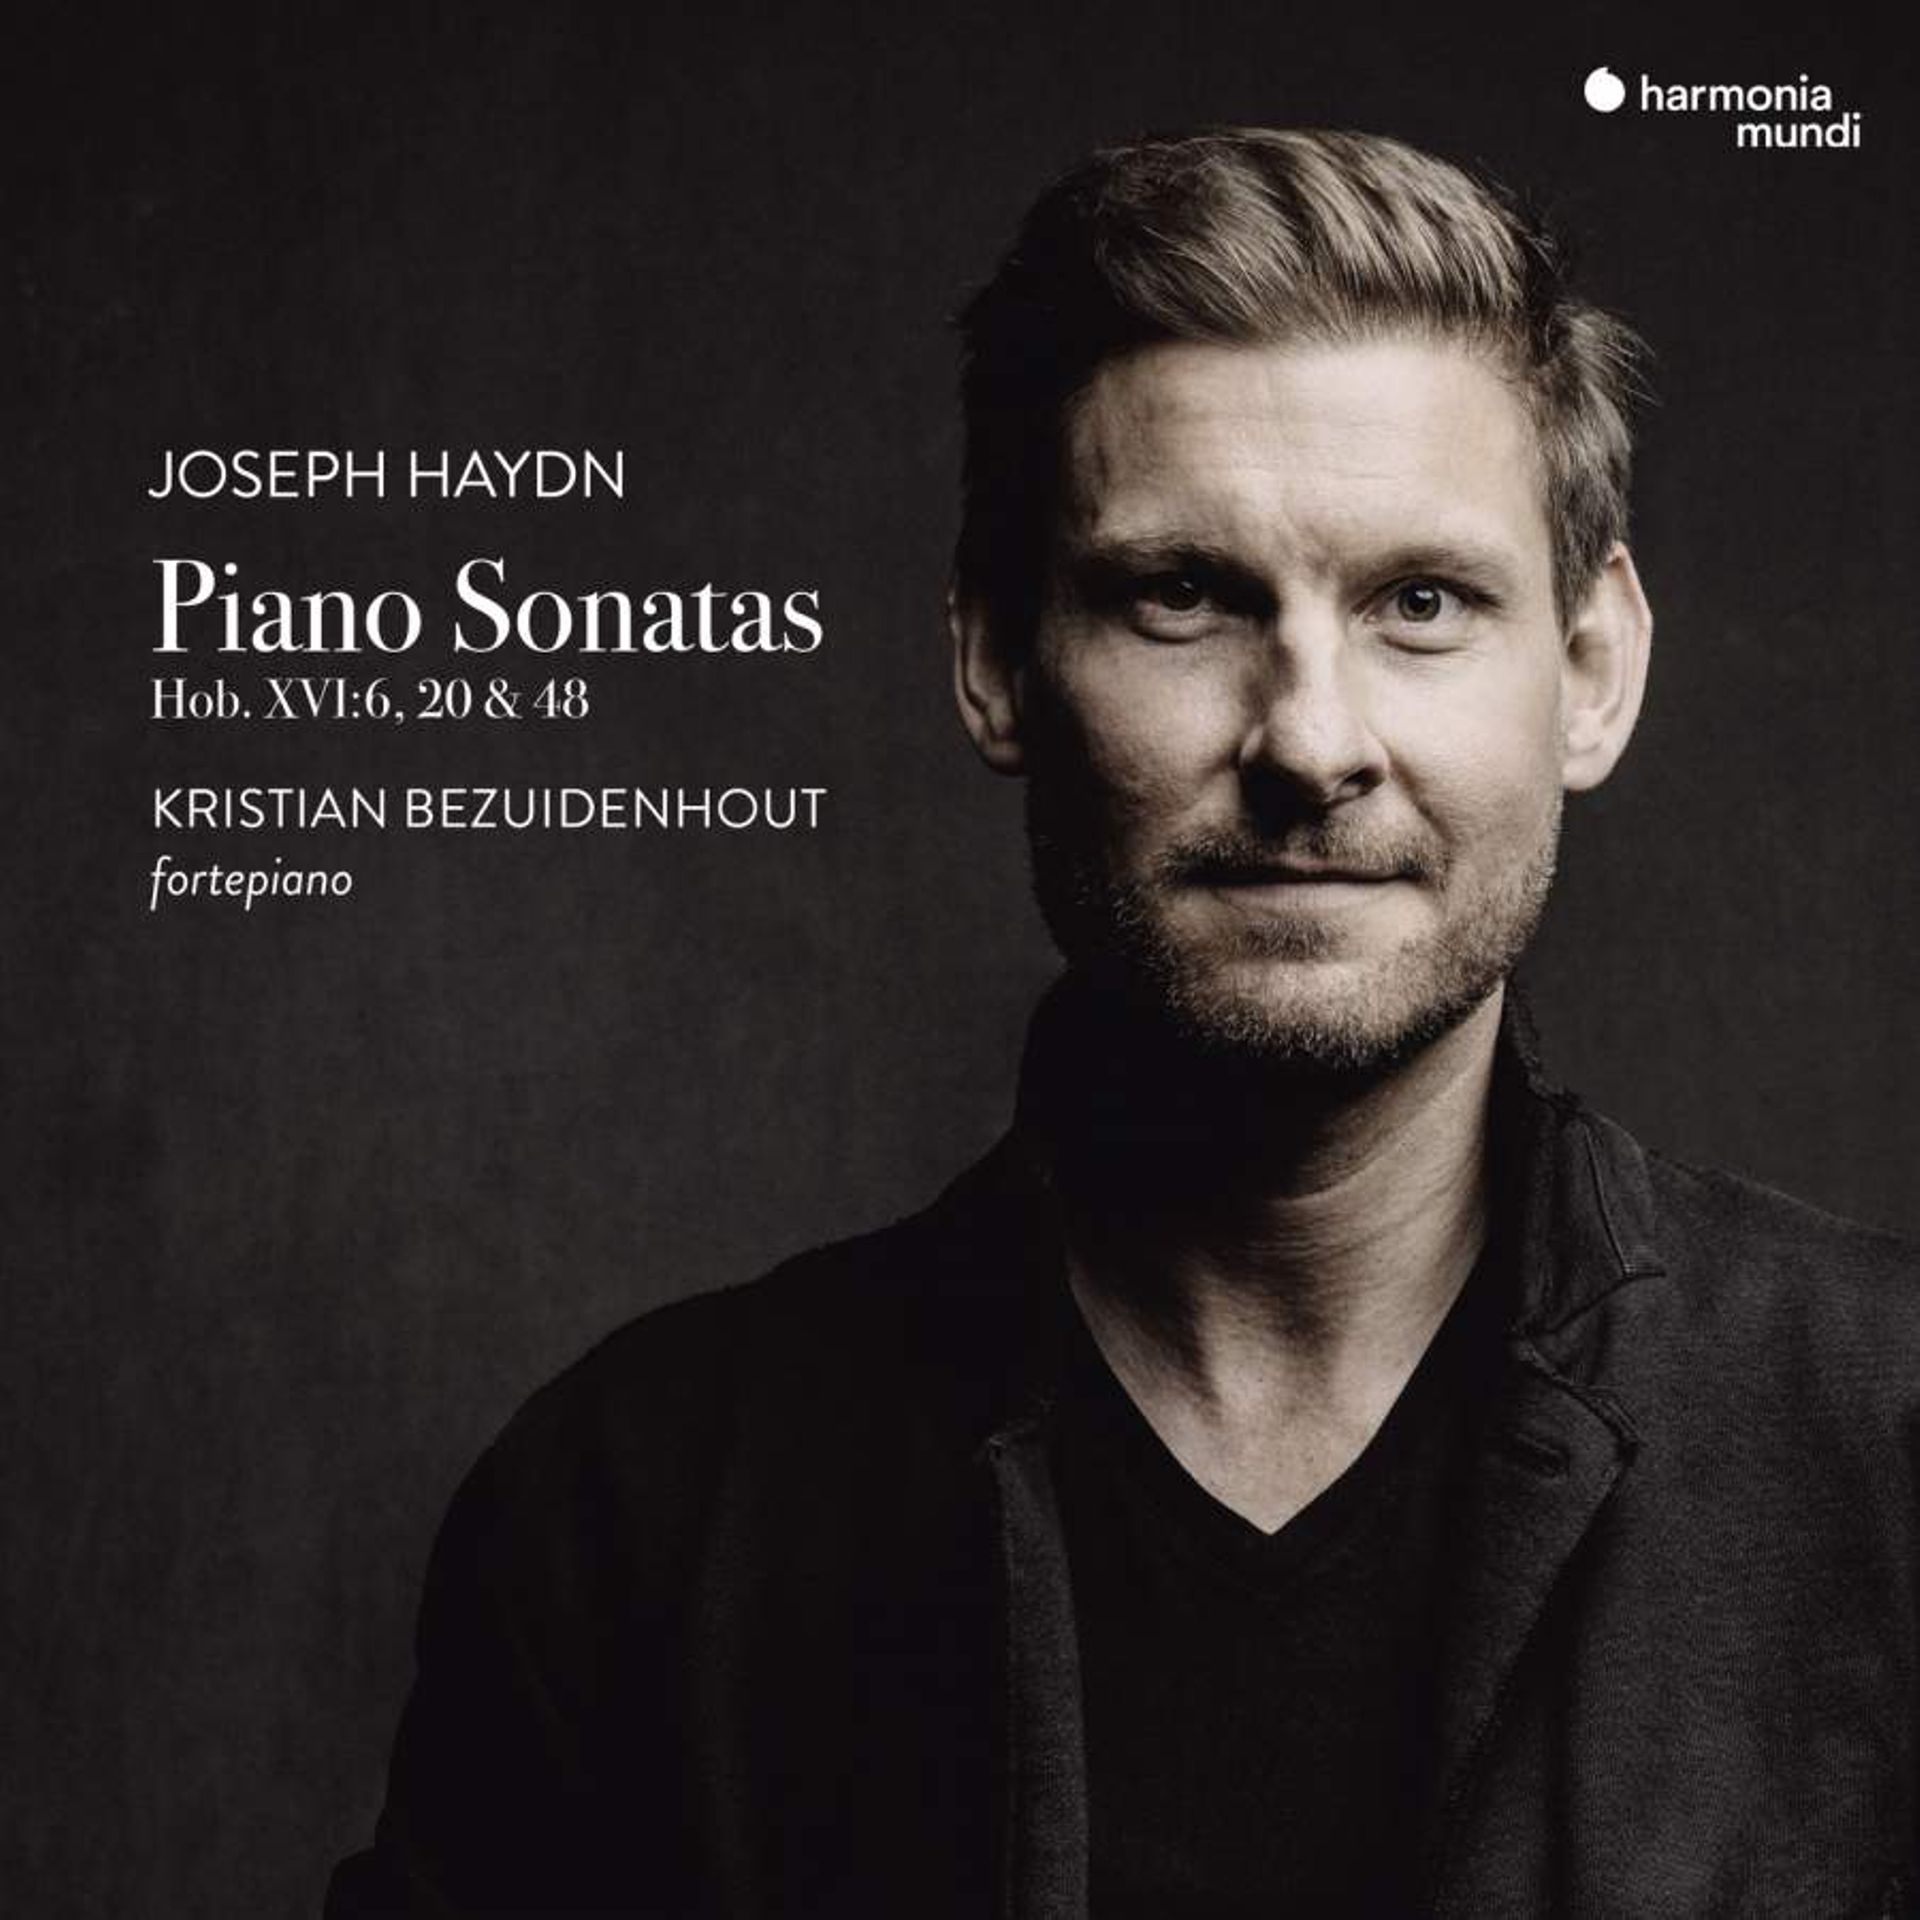 Joseph Haydn - Piano Sonatas  par Kristian Bezuidenhout chez Harmonia Mundi 